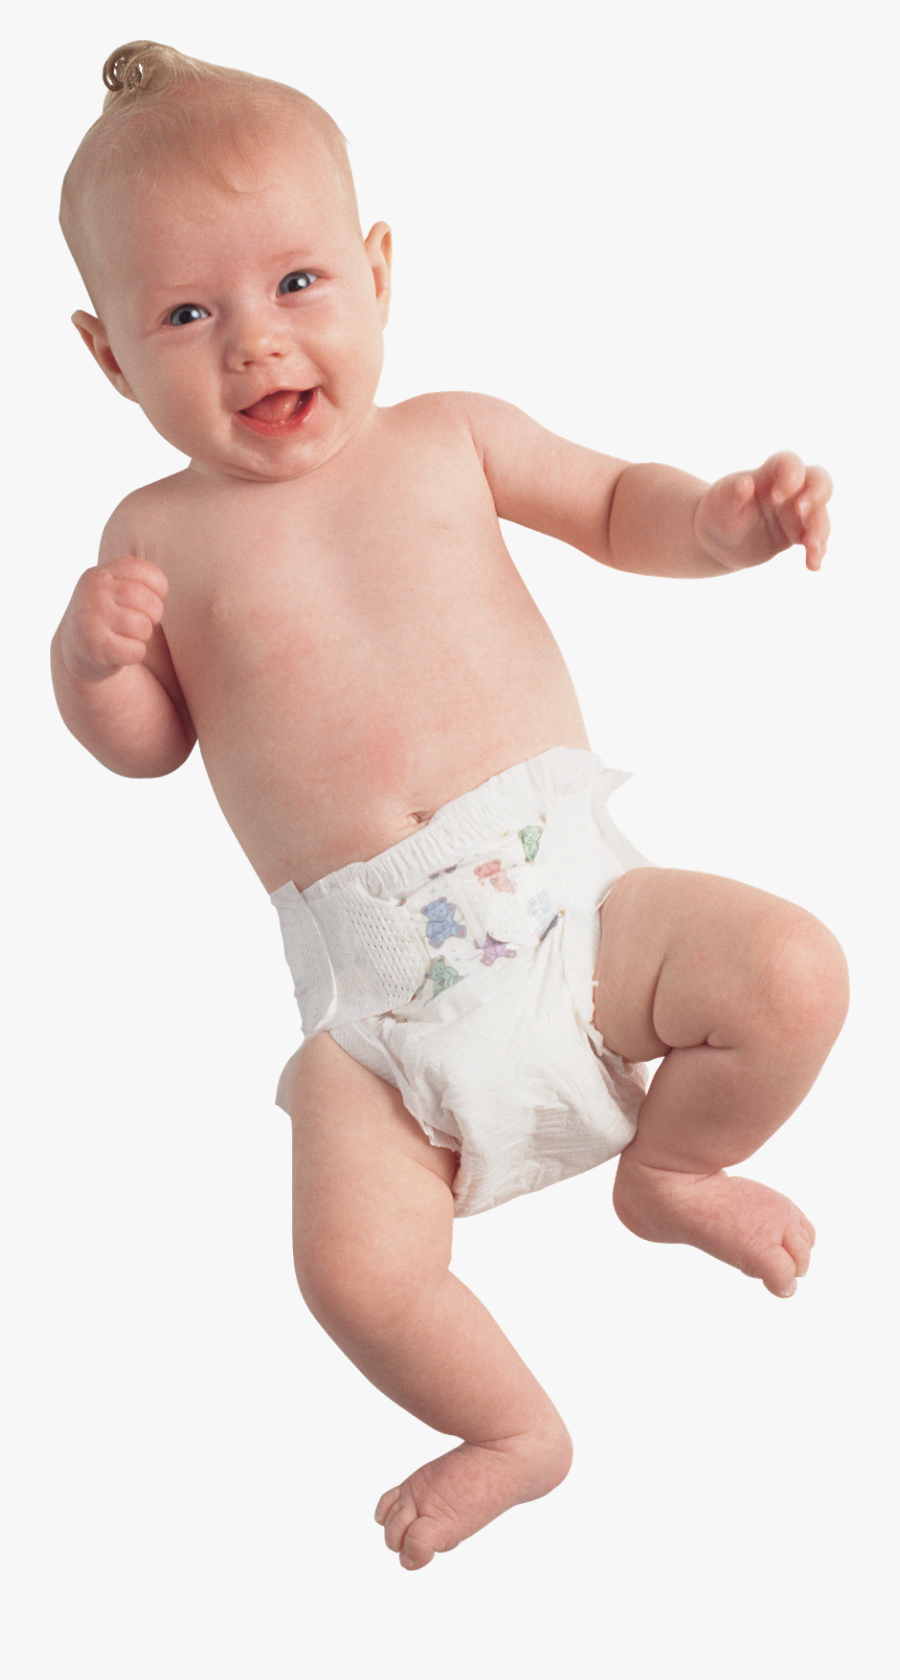 Infant Child Toddler Clip Art - Baby, Transparent Clipart